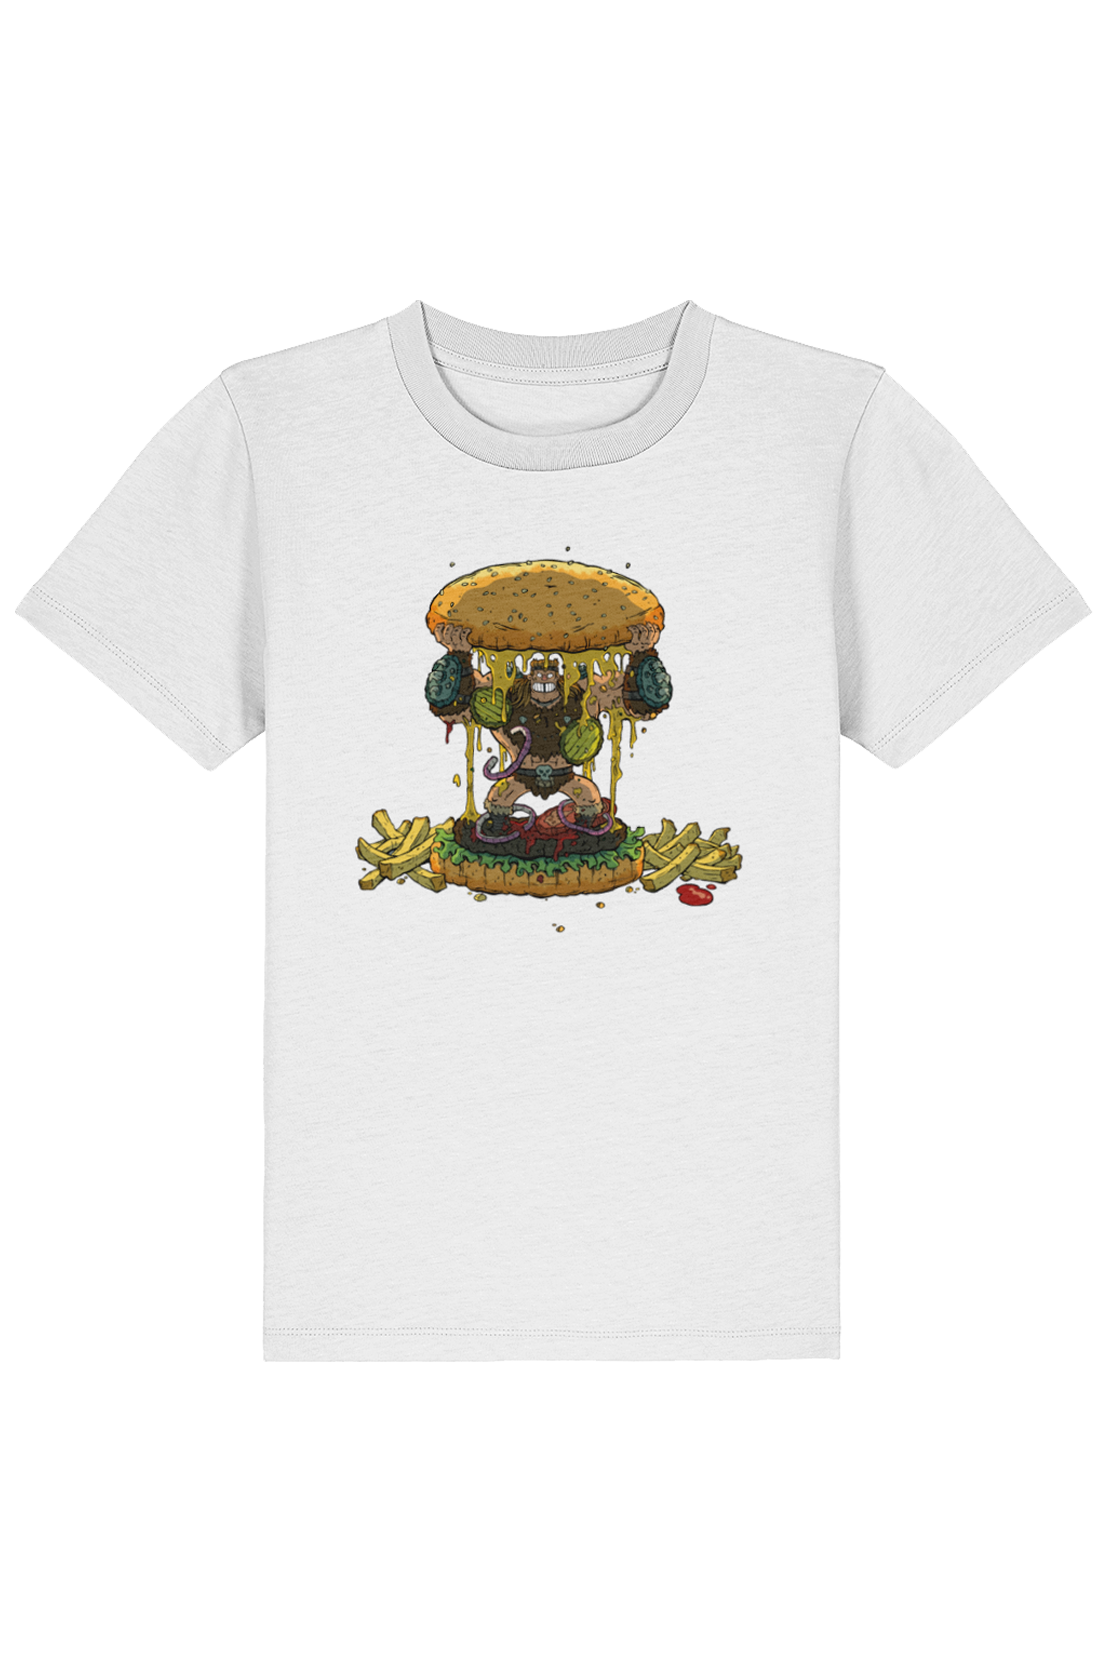 Gorebrah Hamburger kids t-shirt